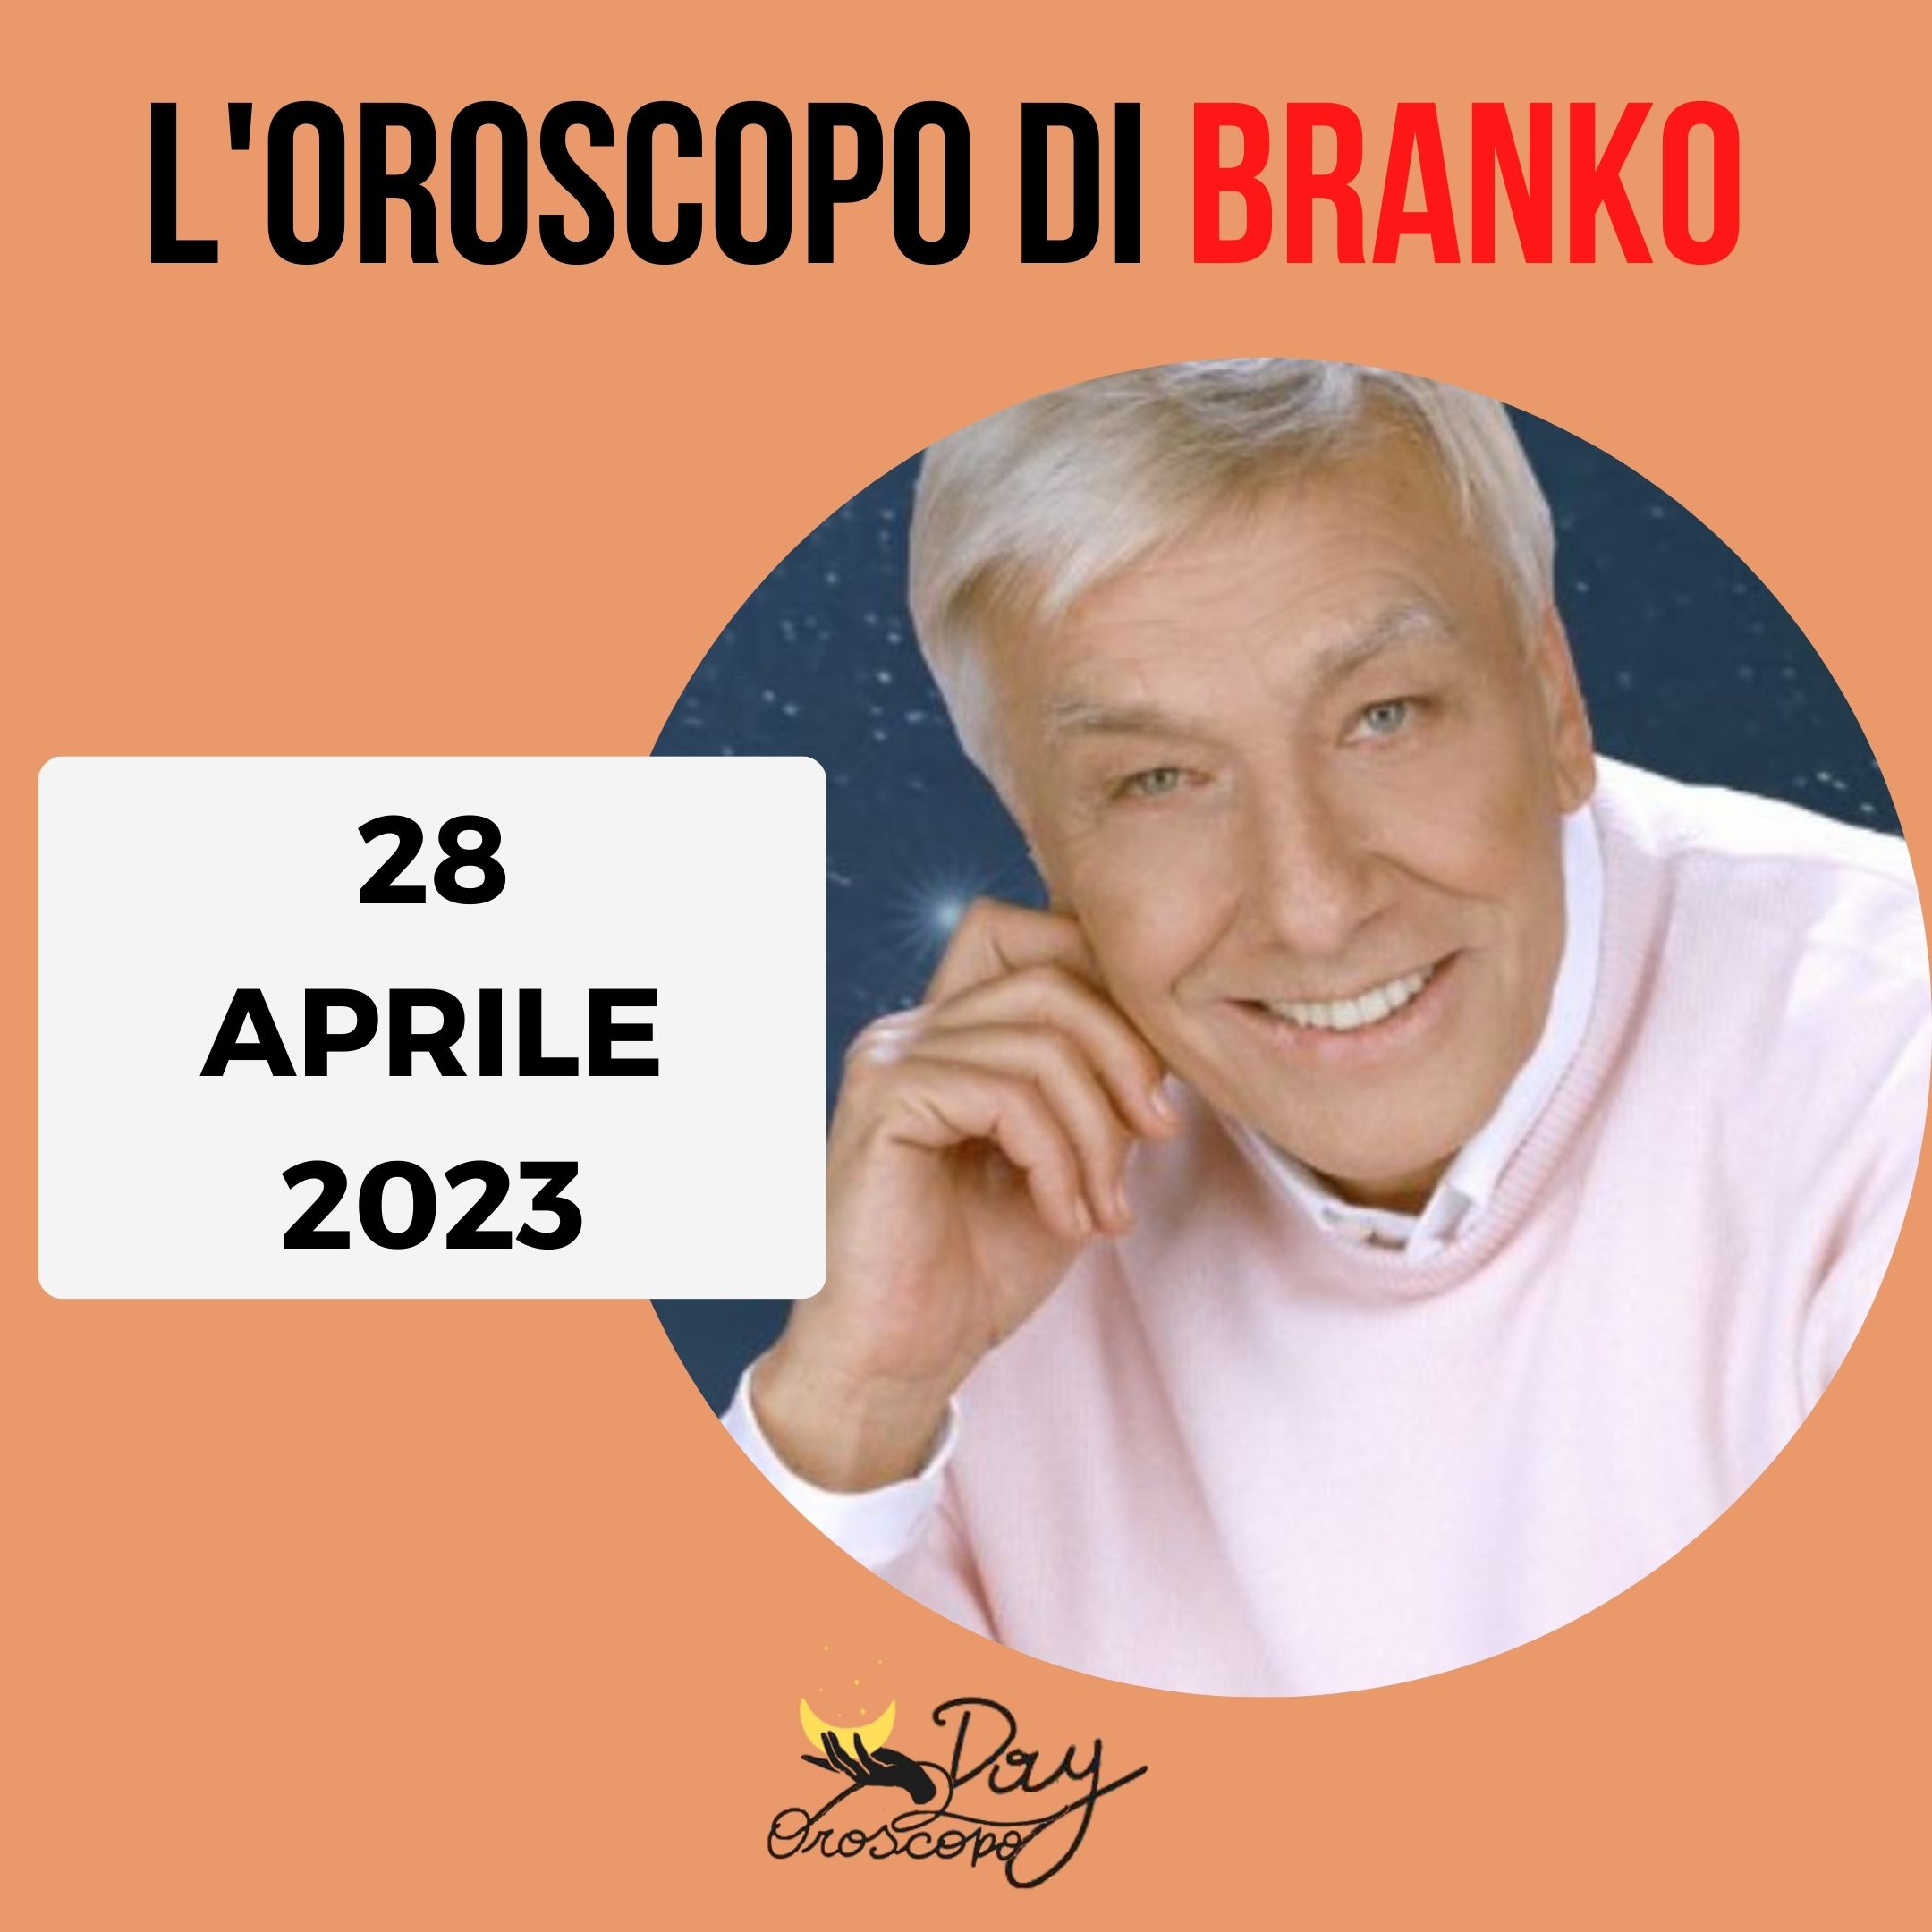 Oroscopo oggi domani Branko 28 aprile 2023